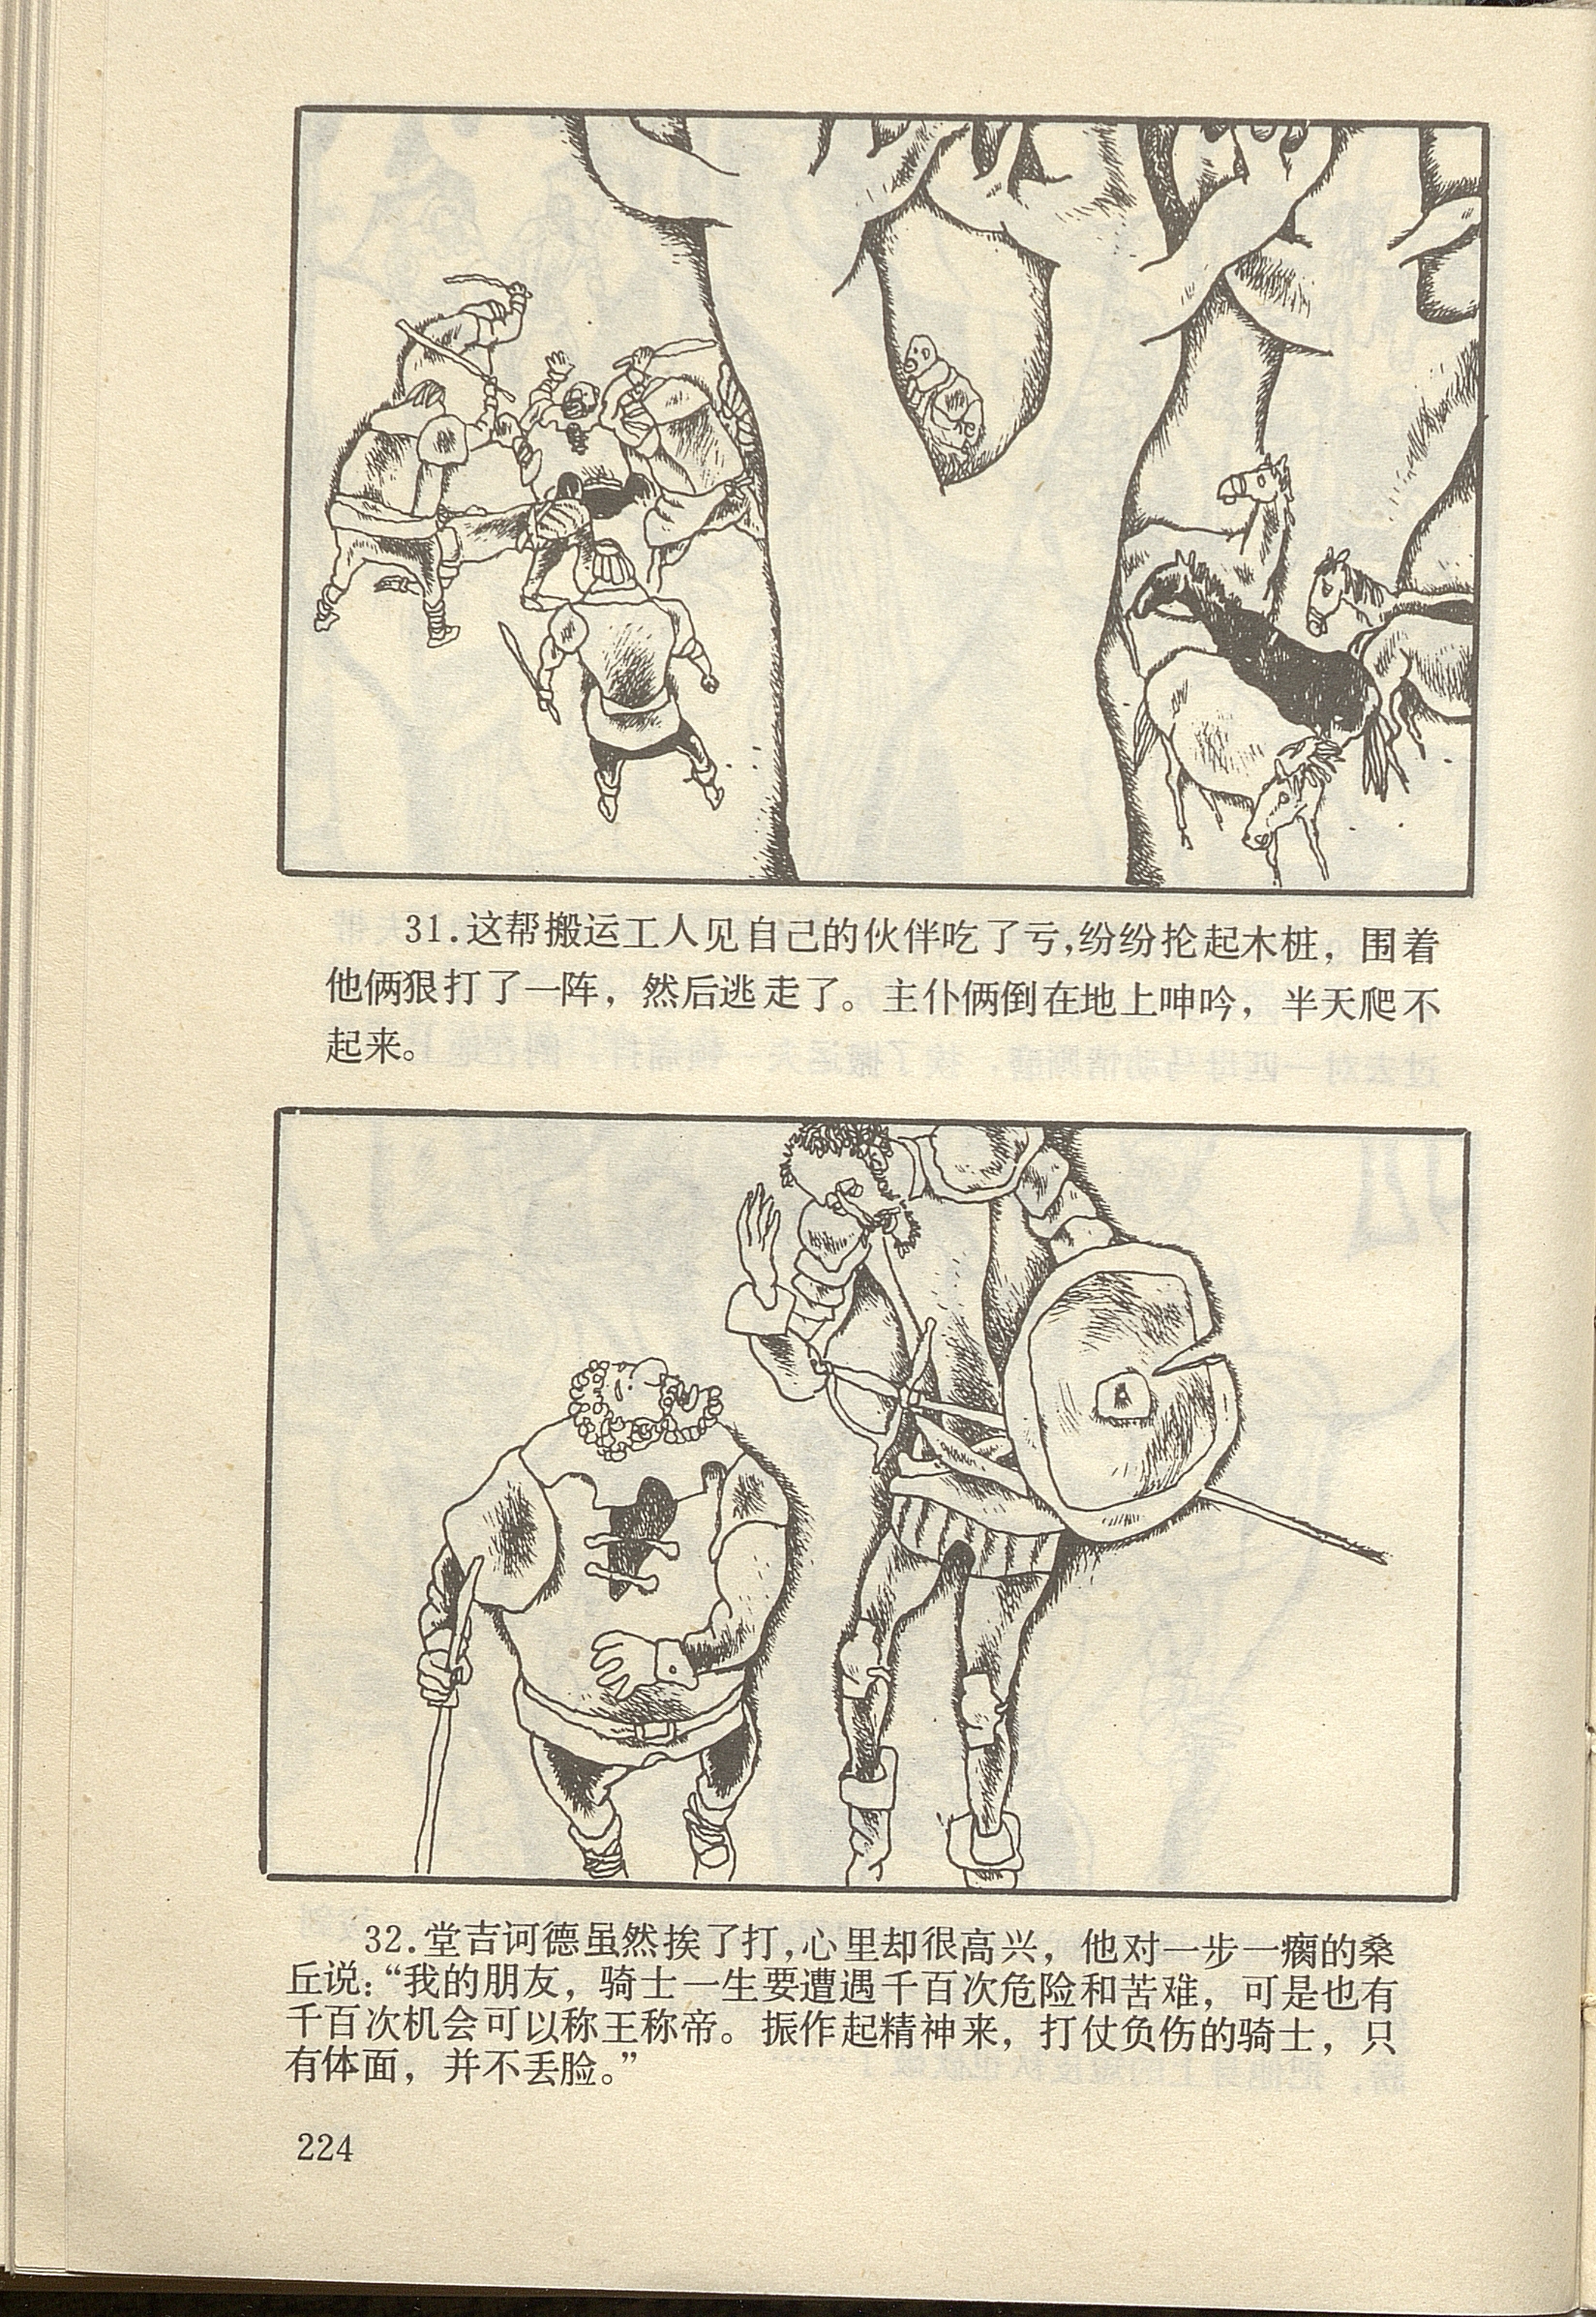 Cómics clásicos de la literatura mundial, Don Quixote / dibujo Zheng Kaijun; traducción Yang Jiang; adaptación Zhong Gaoyuan.